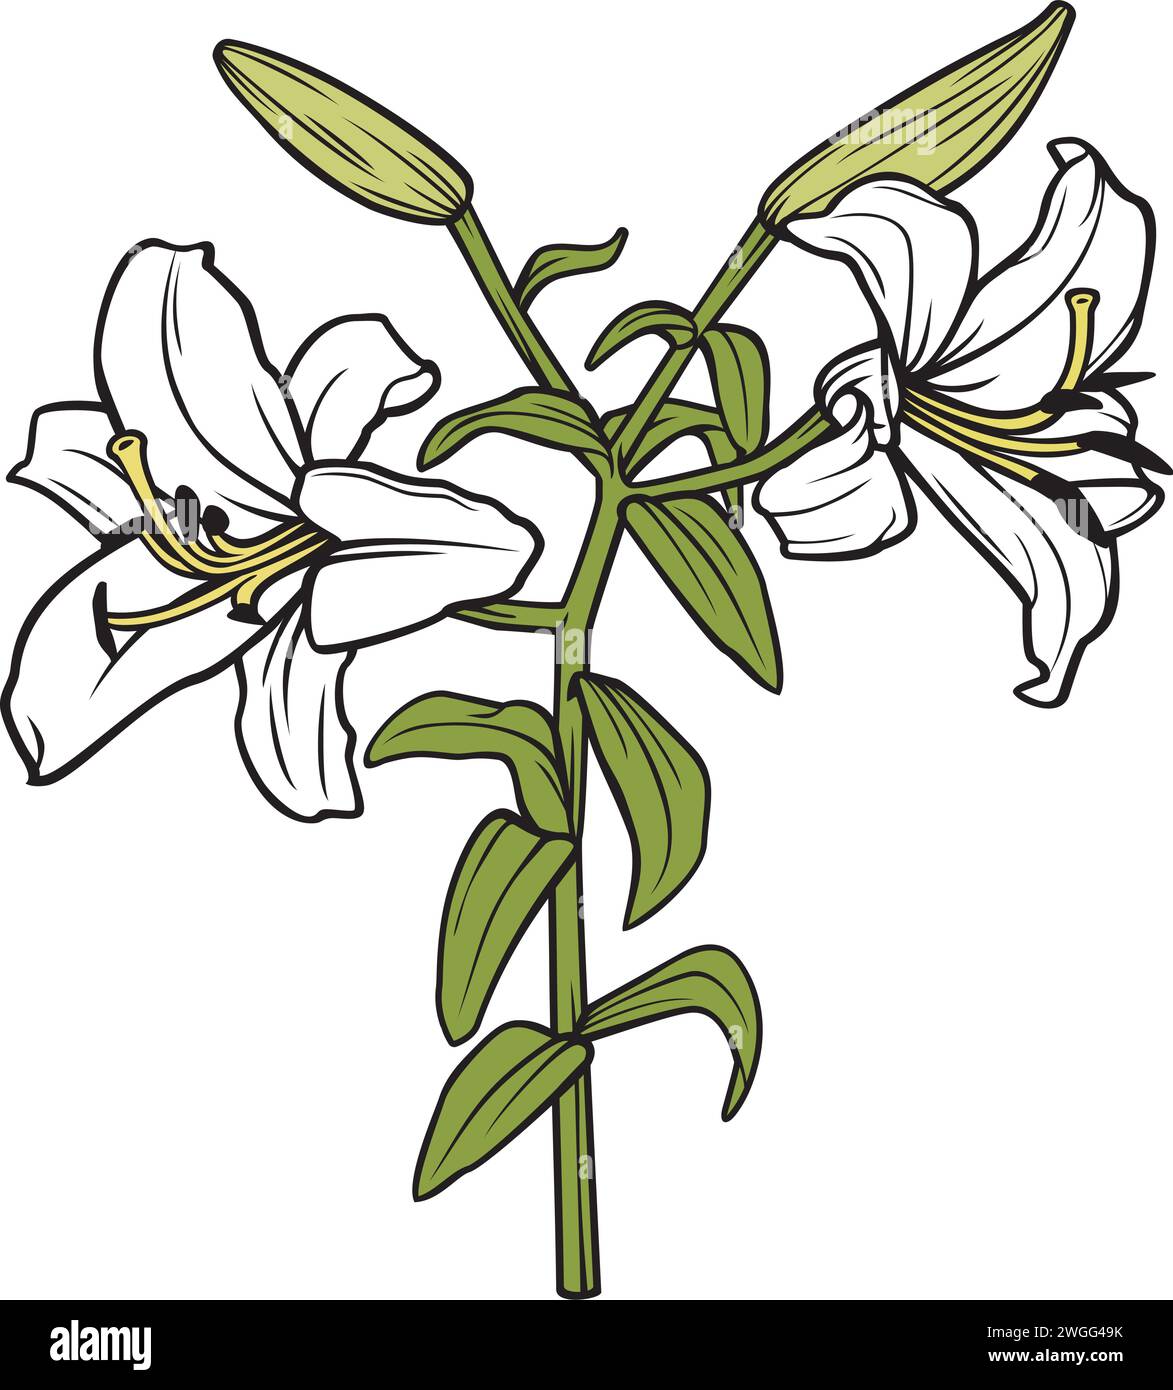 Weiße Lilienblume Vektor-Illustration Stock Vektor